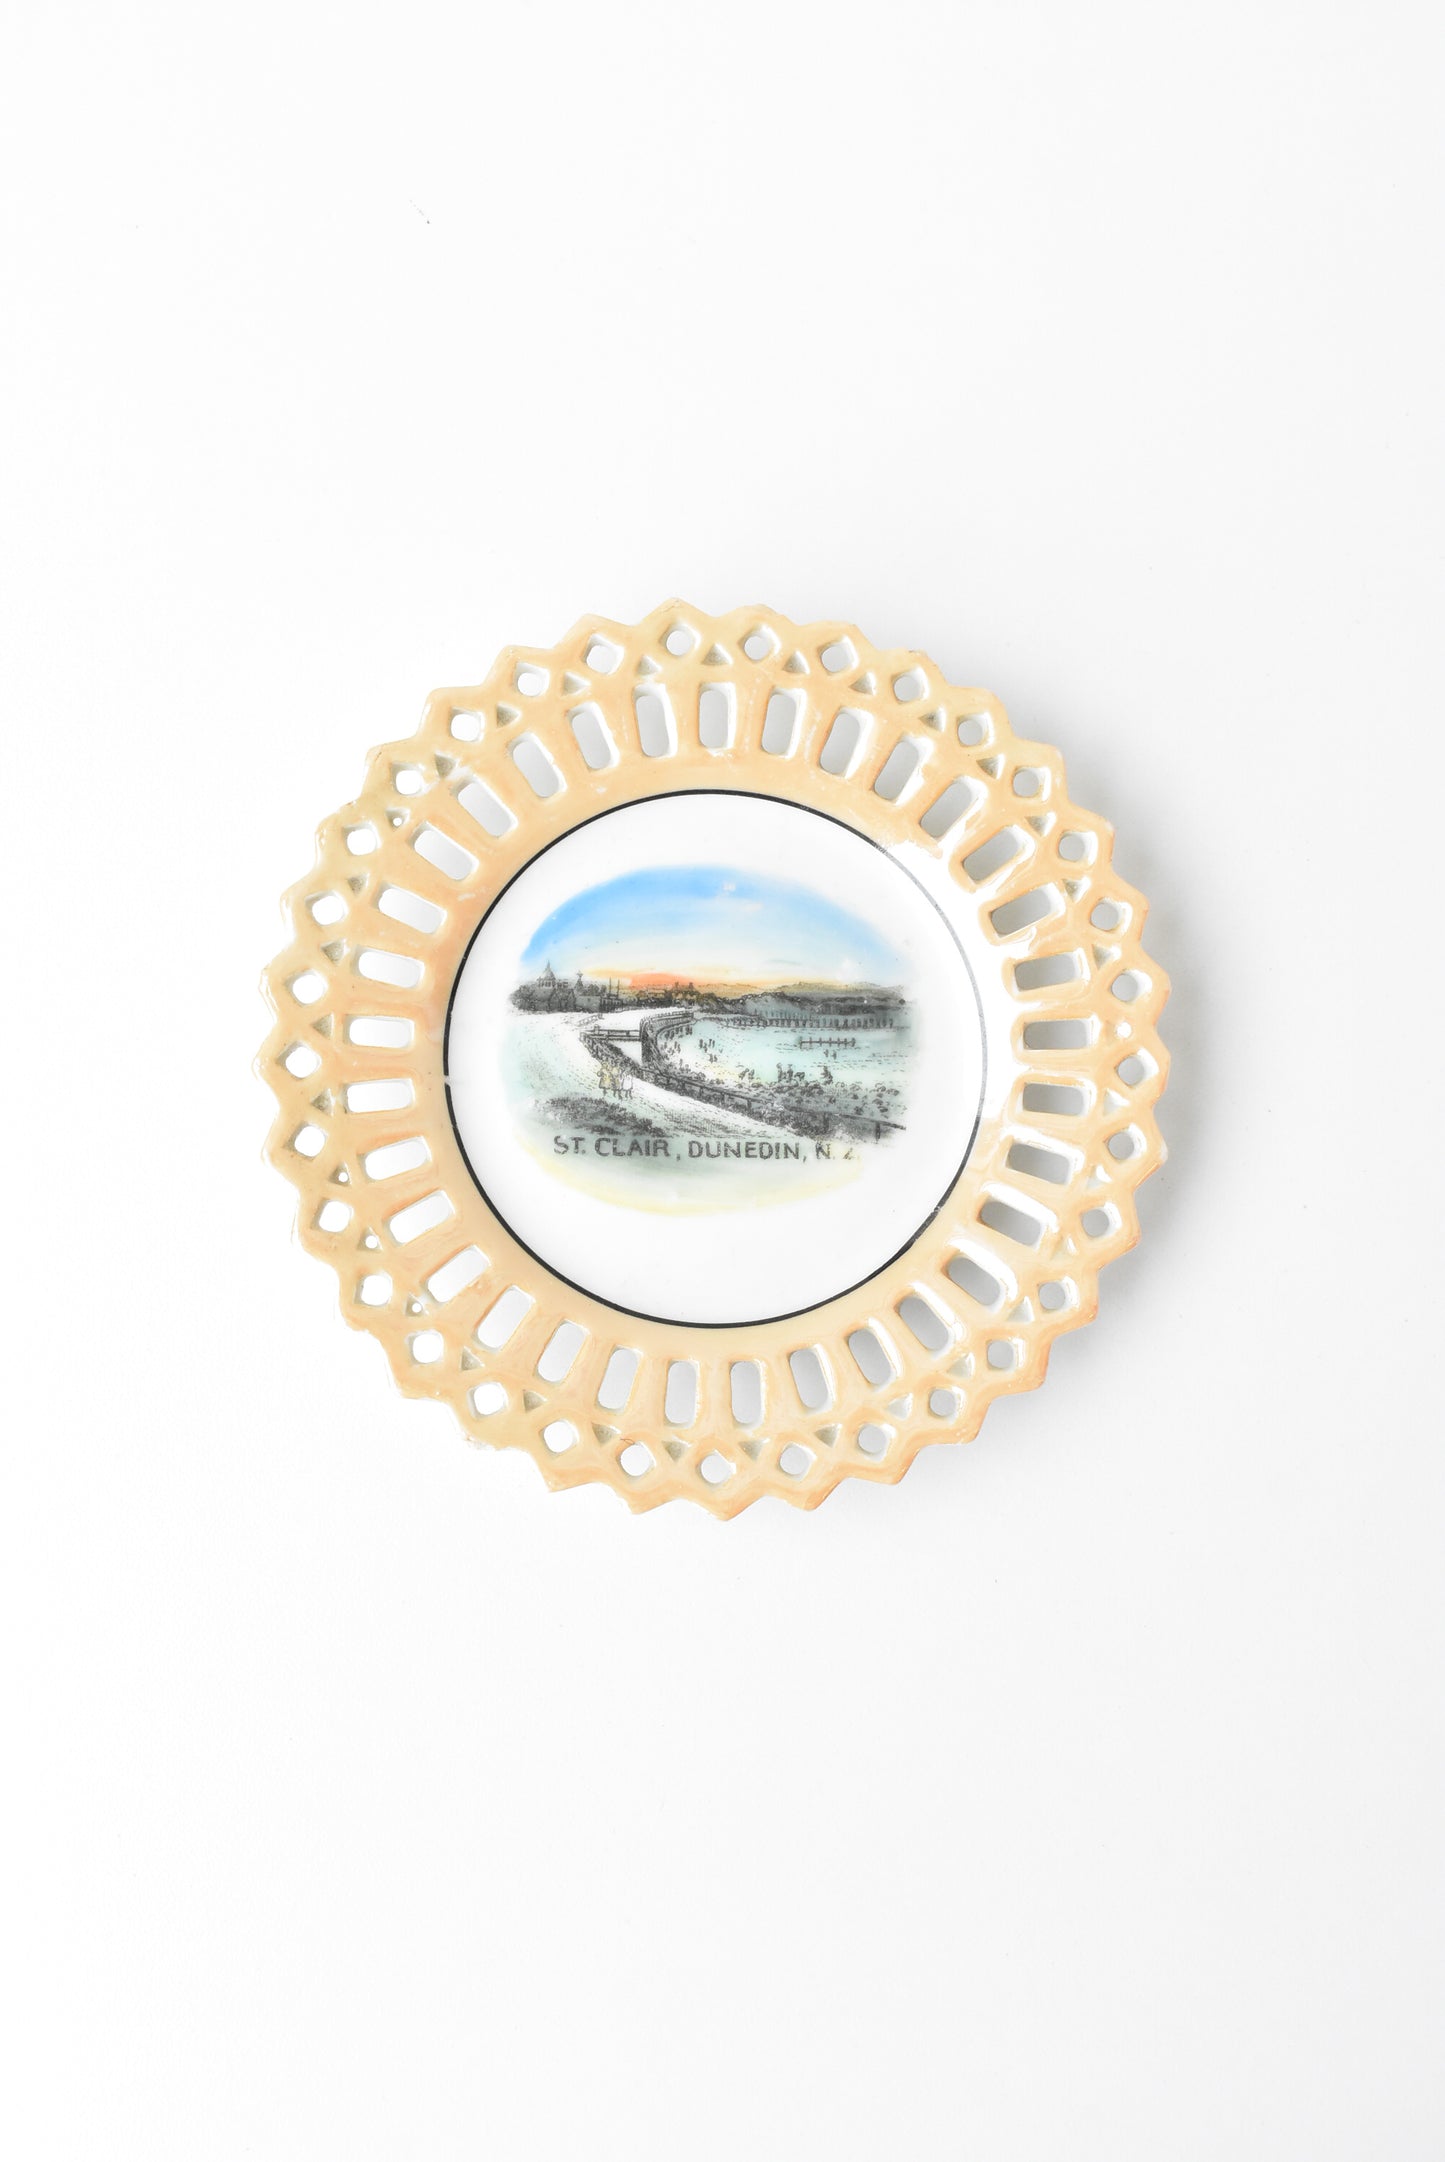 Retro St Clair Dunedin souvenir plate